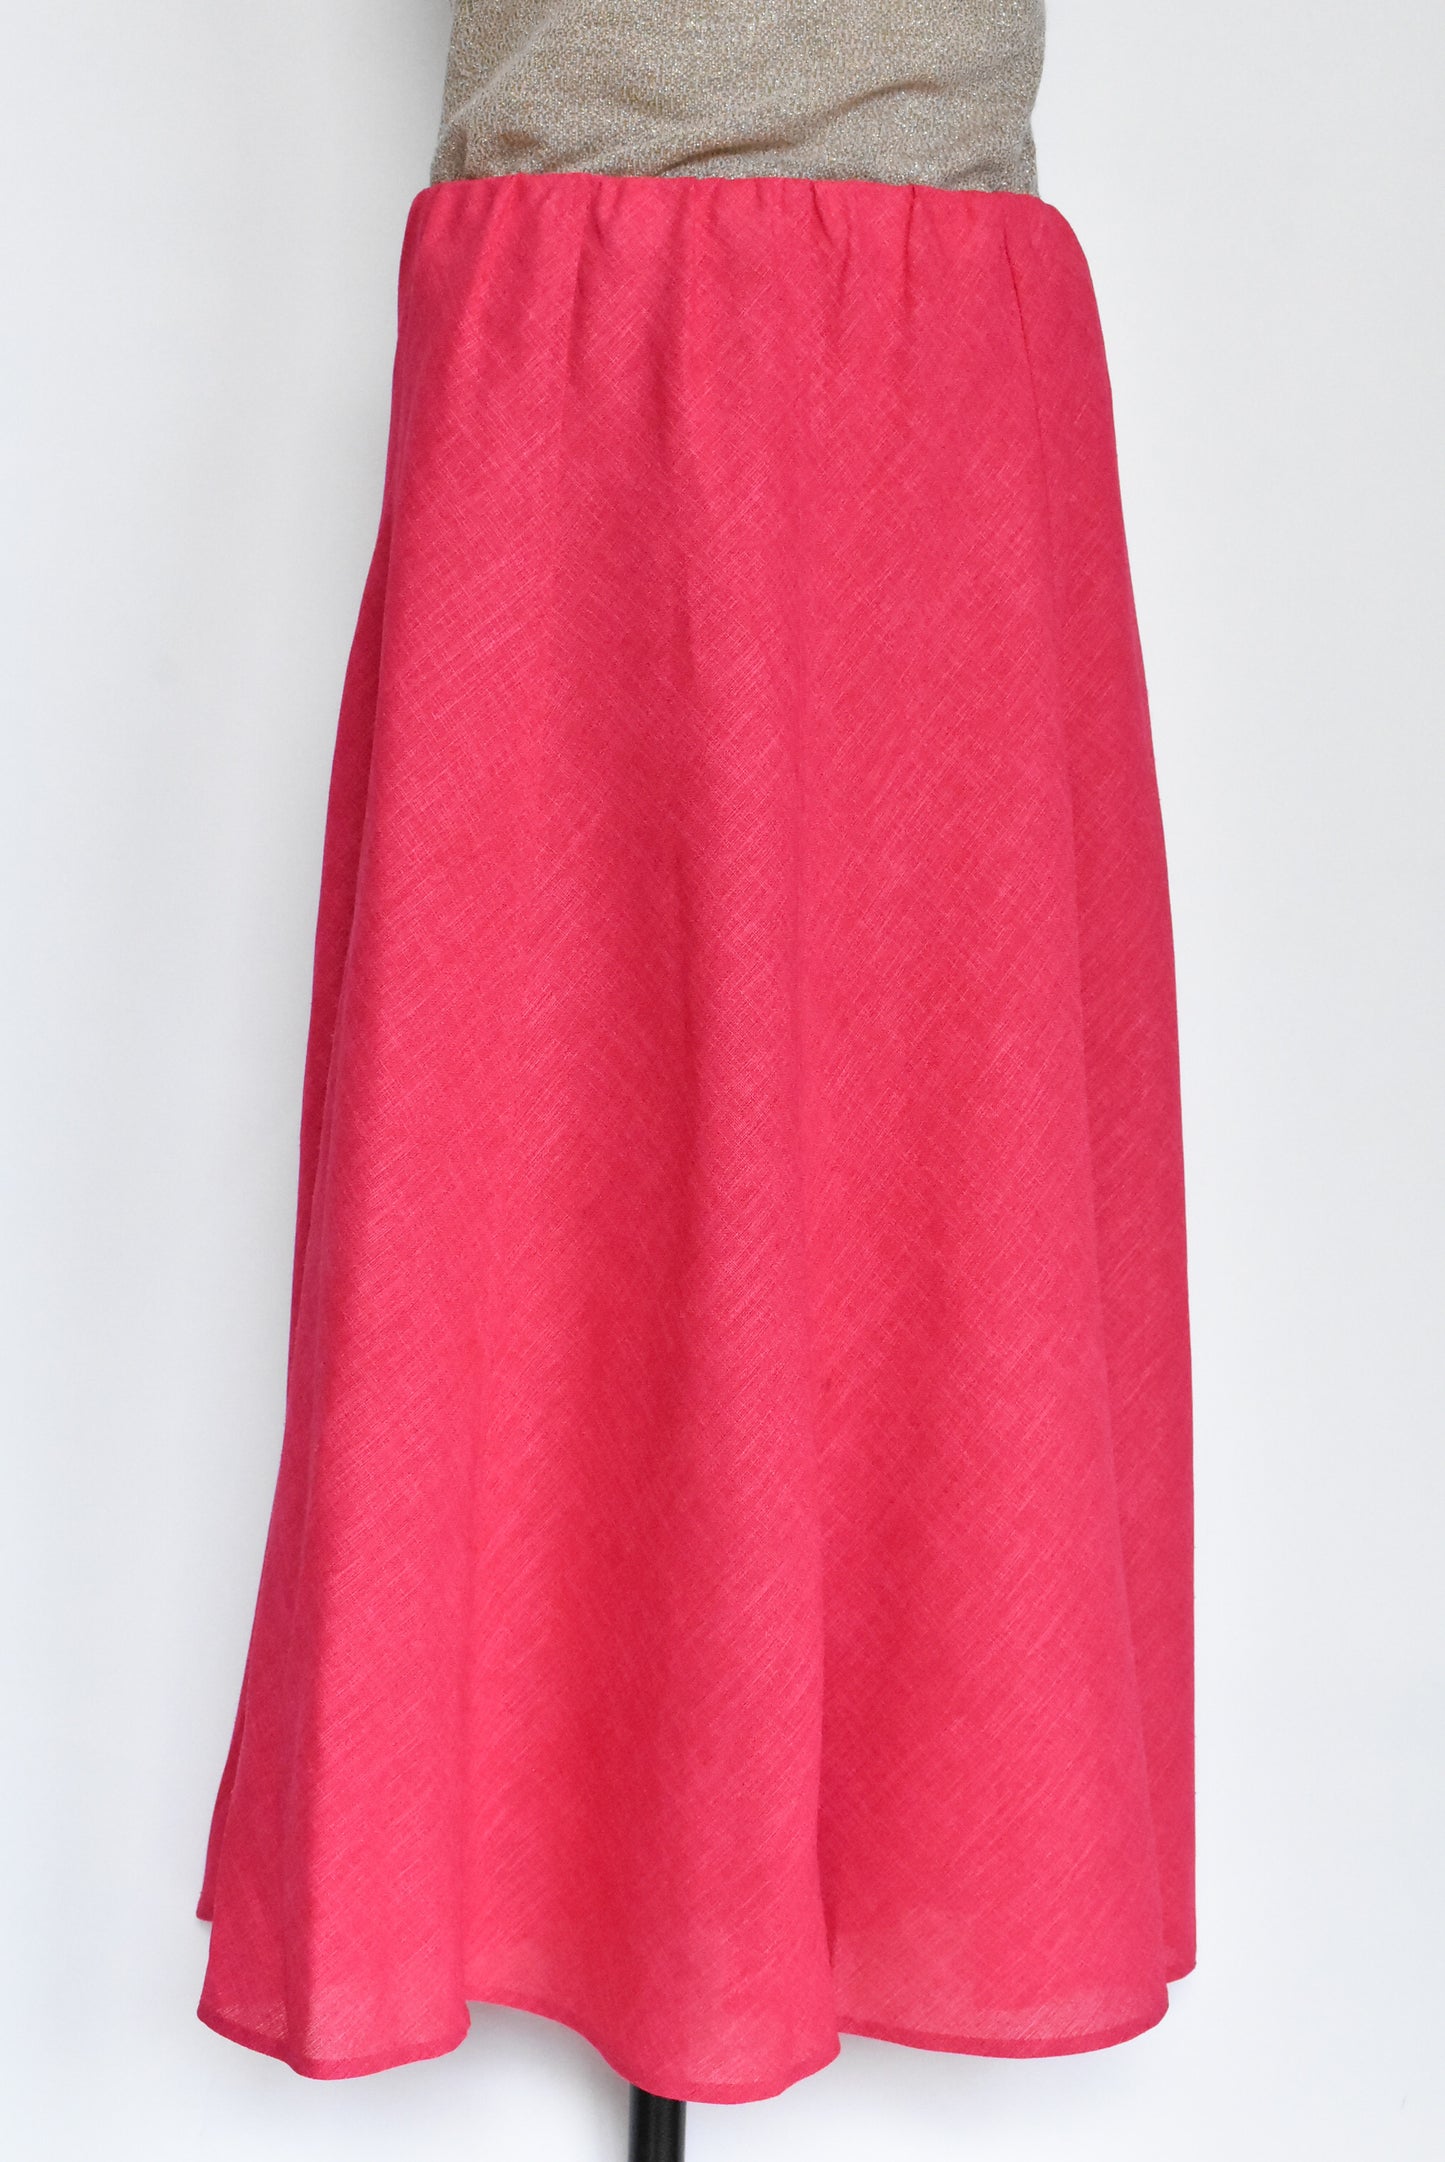 Classique bright pink A-line skirt, 12